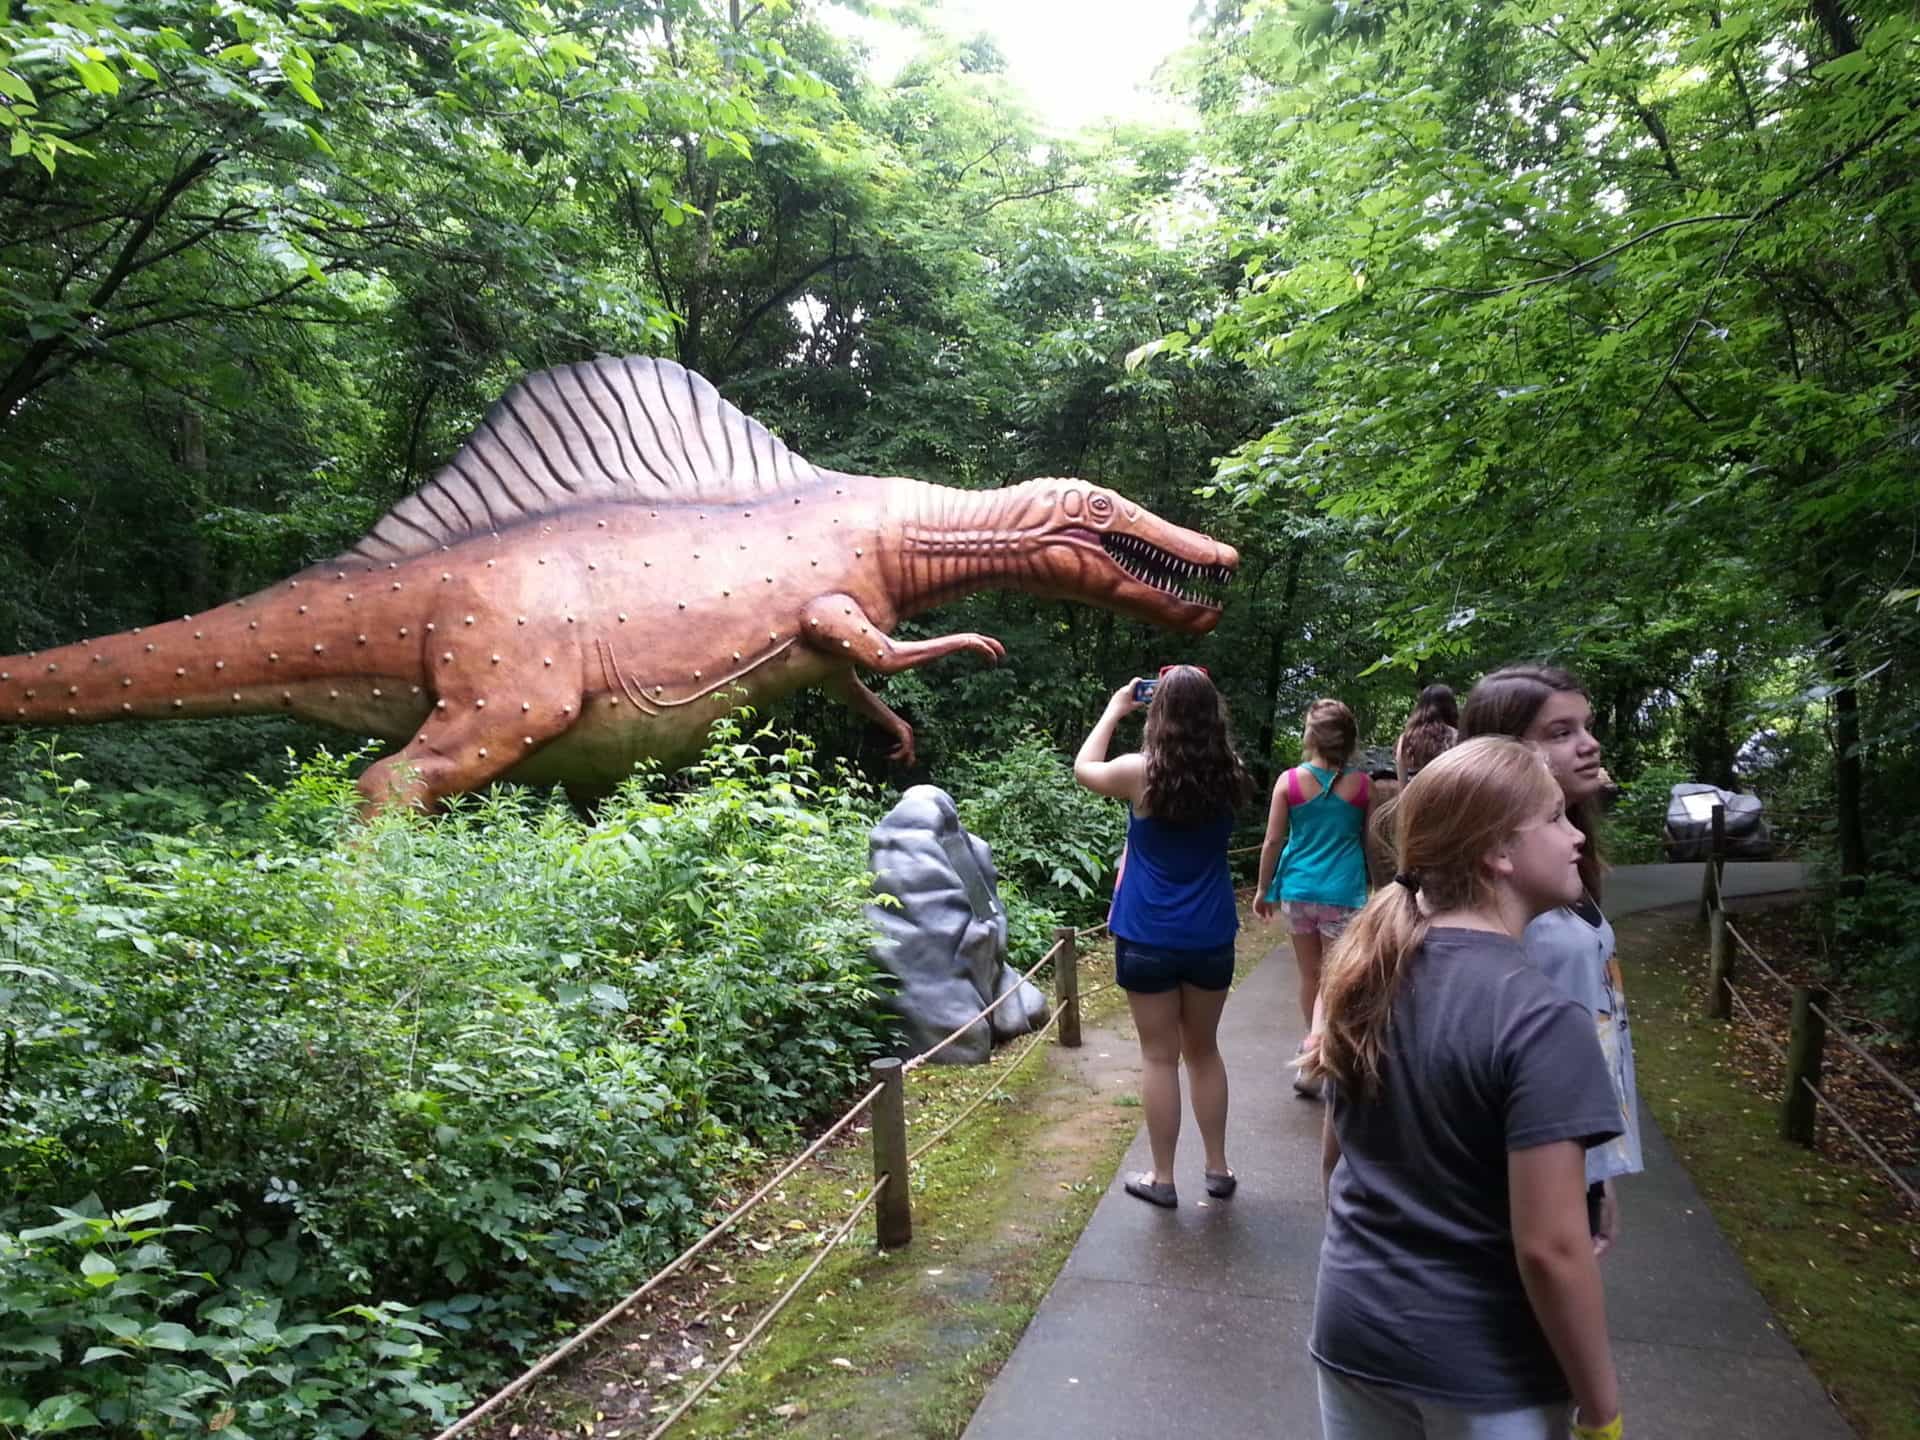 Dinosaur World close up large dinosaur statue